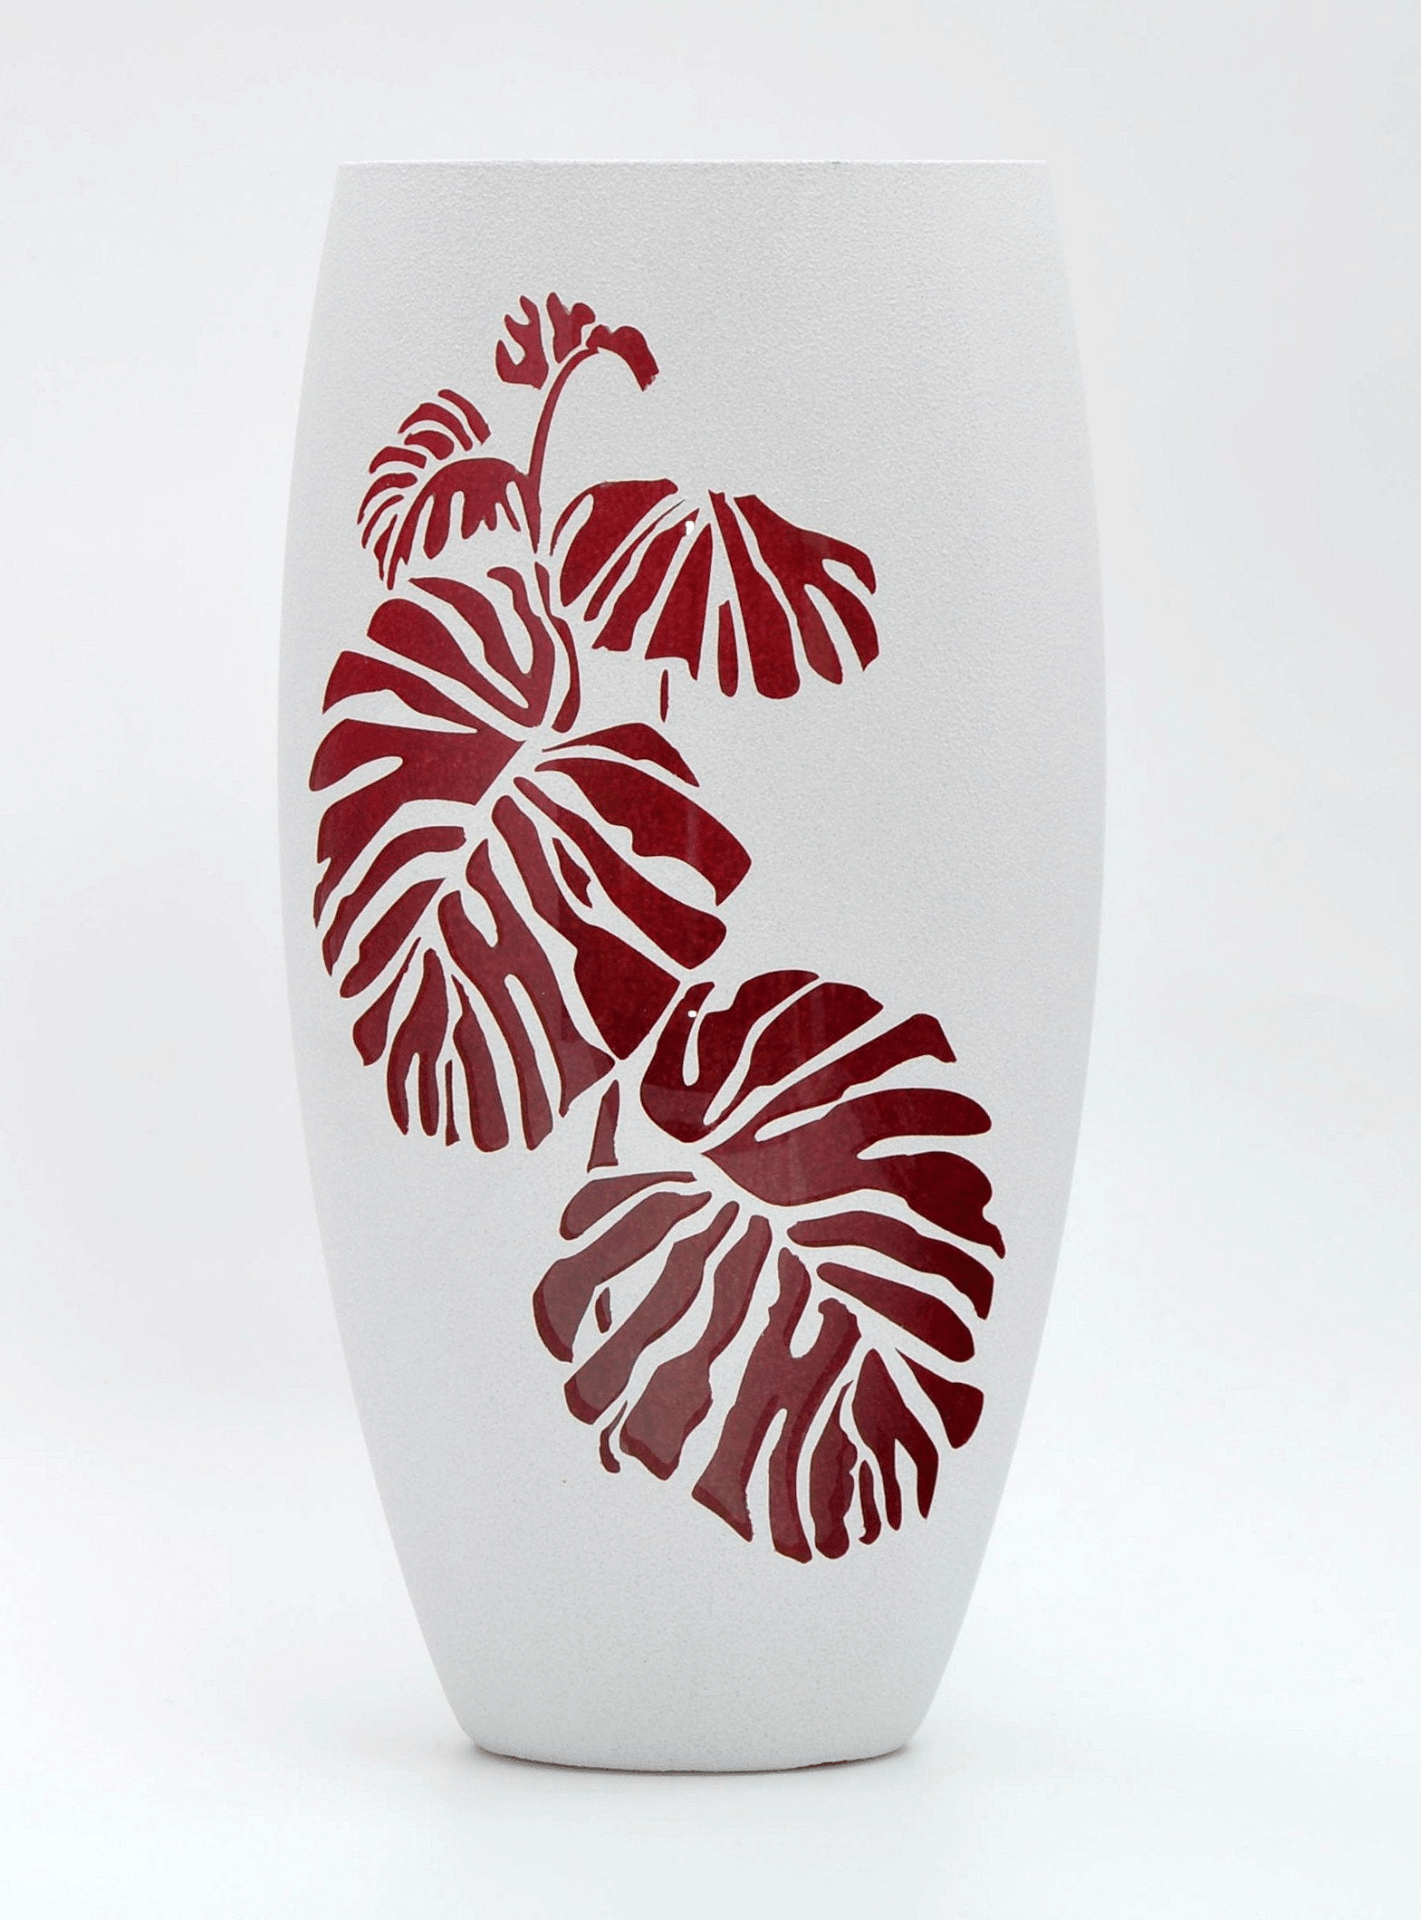 Burgundy Interior | Art decorated vase | Handmade Glass Oval Vase | Home Design | Room Decor | Table vase 12 inch | 7518/300/sh160.1  